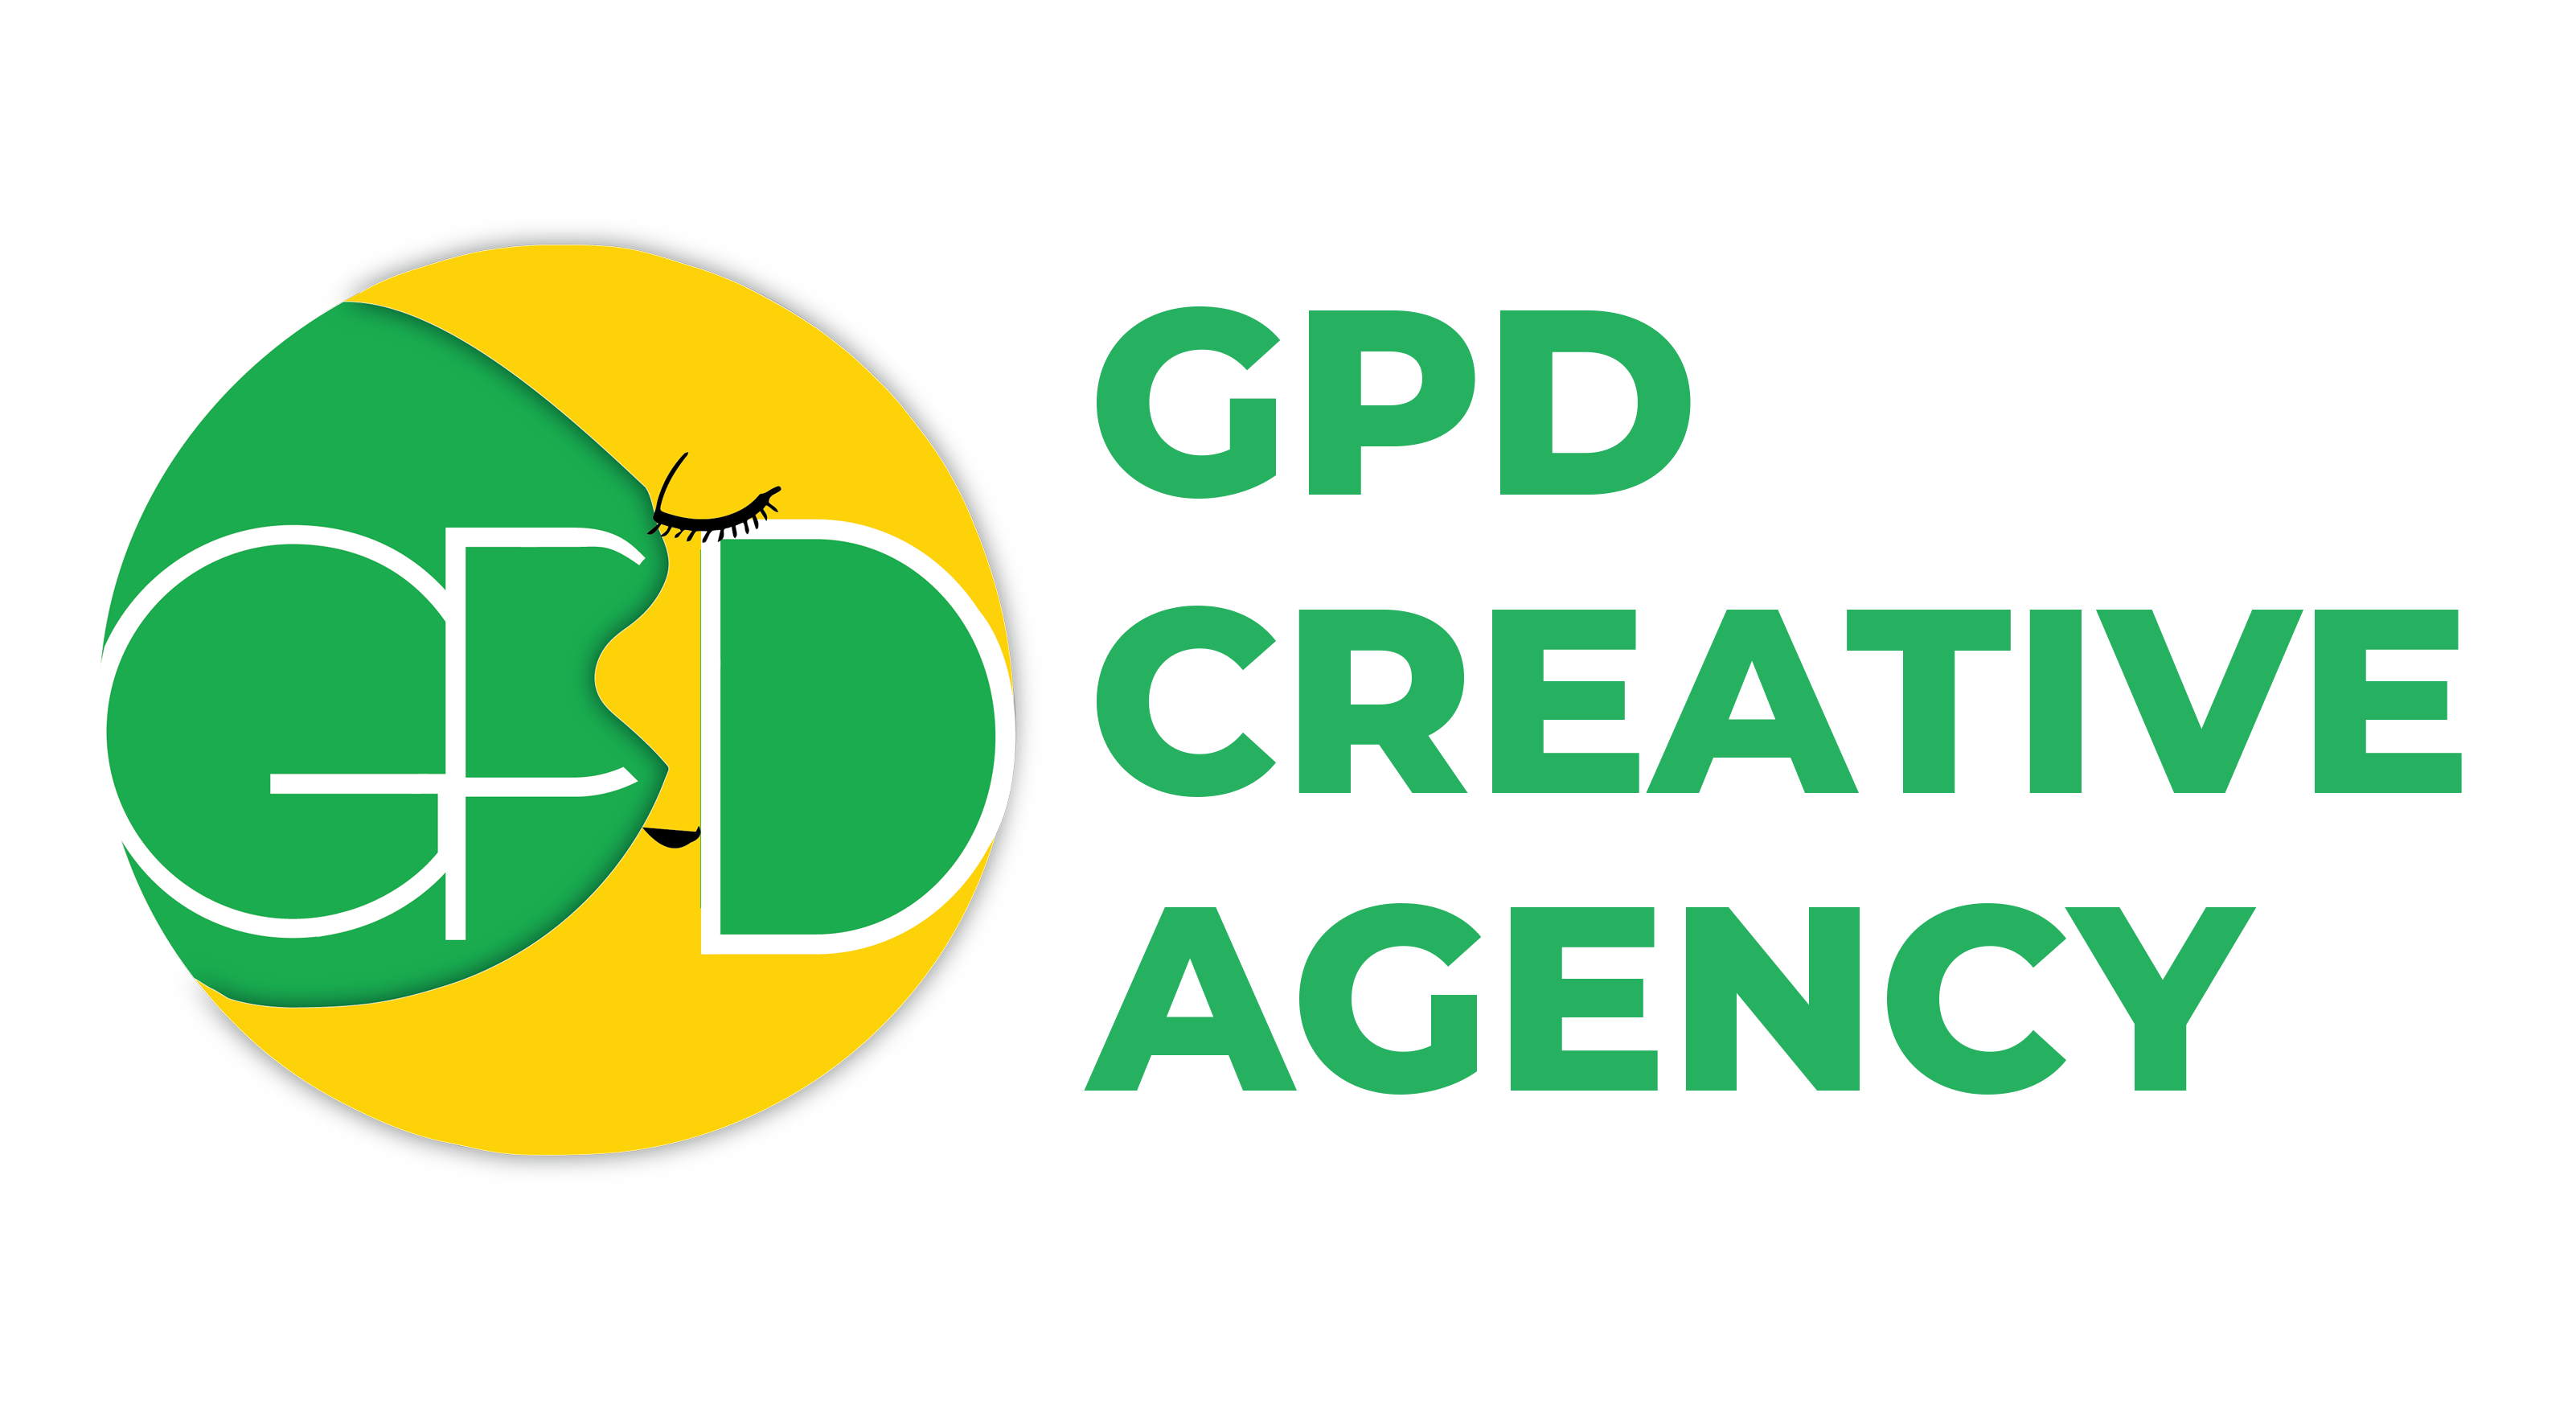 GPD Creative Agency